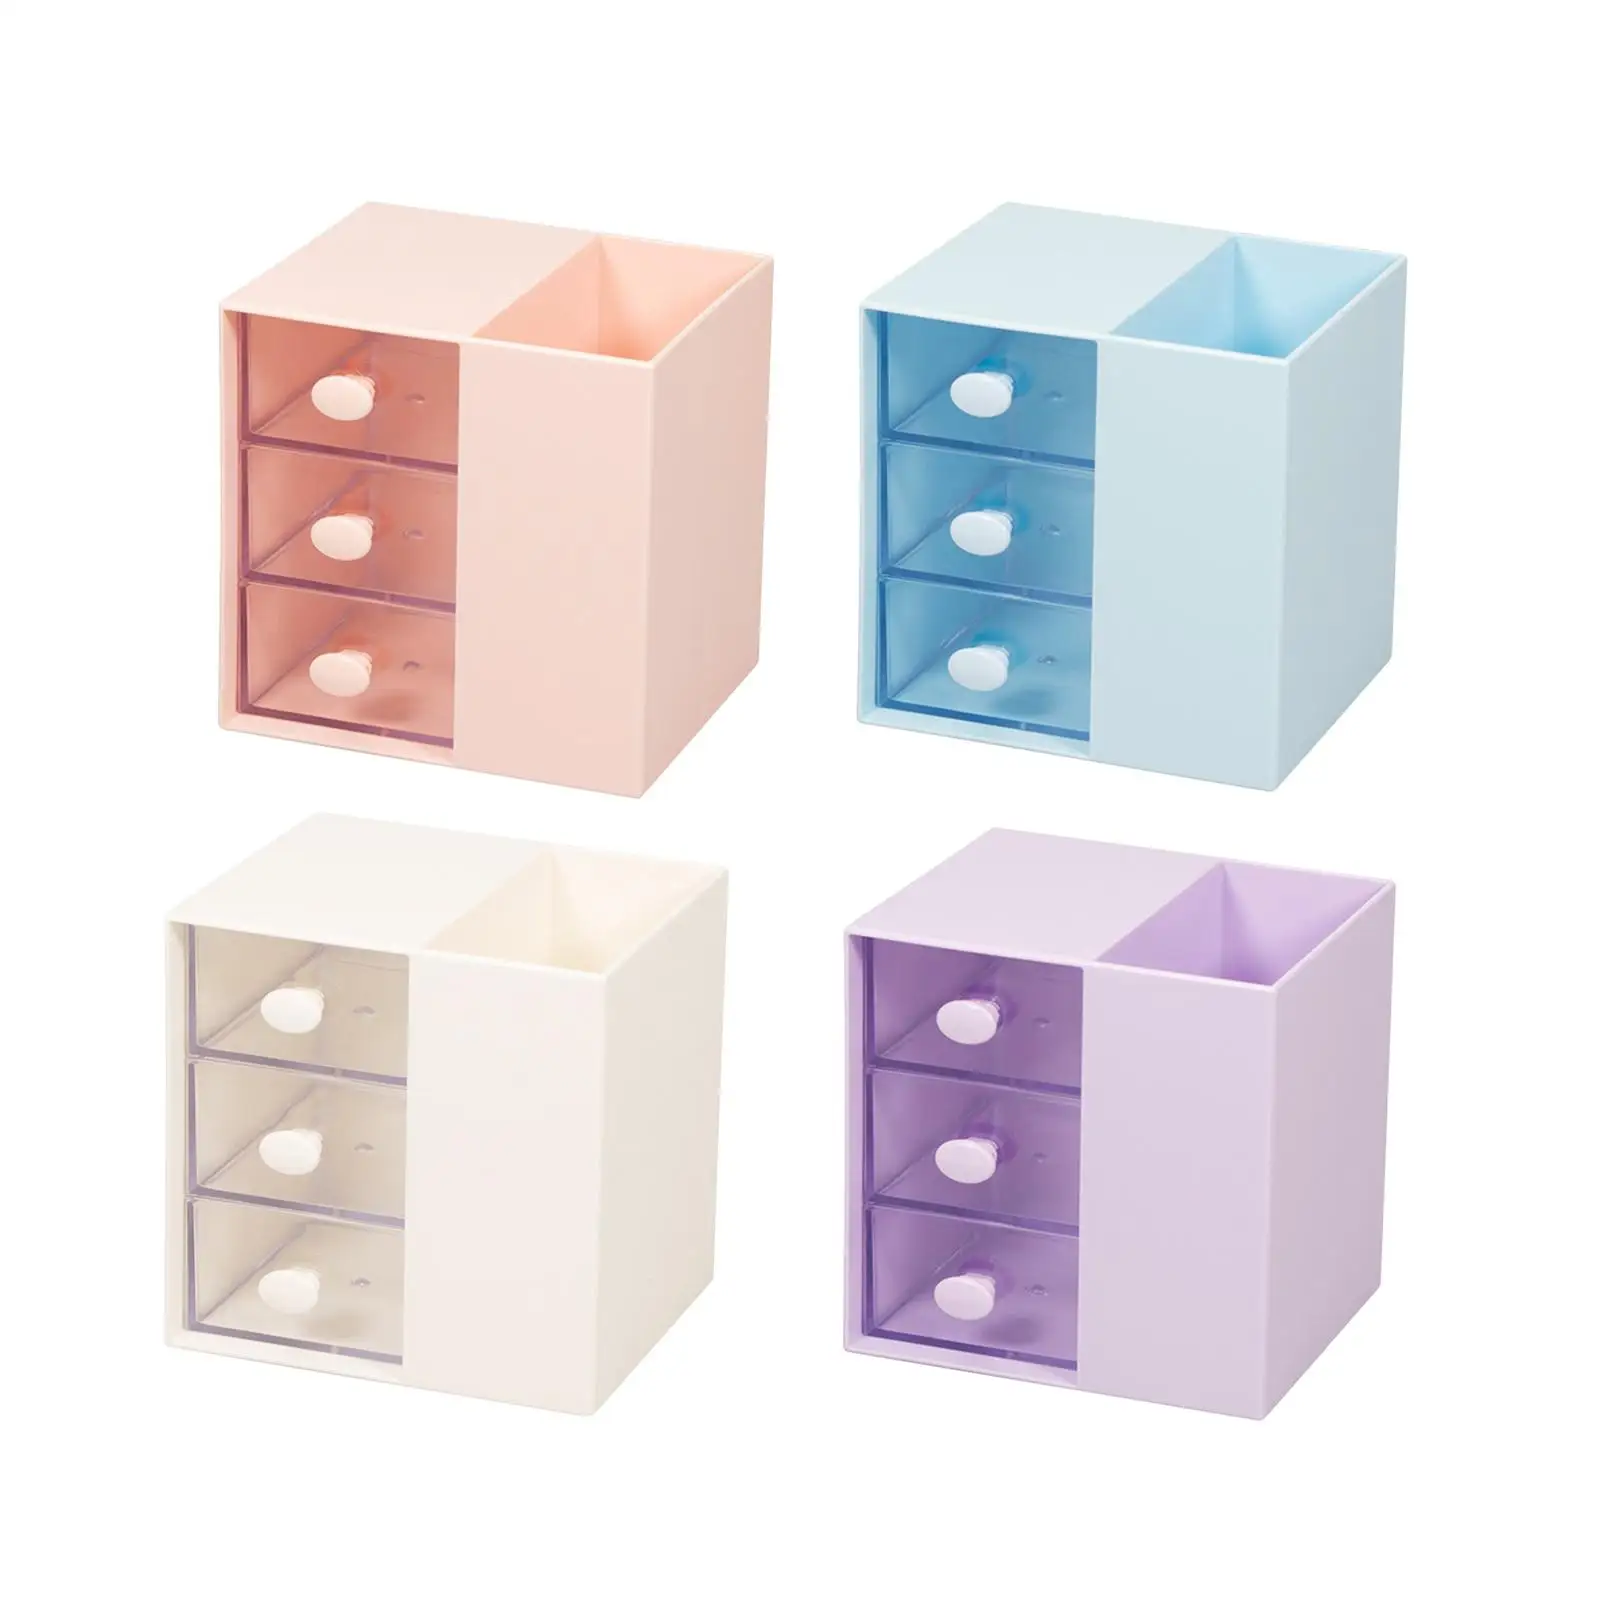 Vanity Organizer Pencil Storage Box with 4 Compartments ,5x4x13inch Bathroom, Counter, Dresser Organization